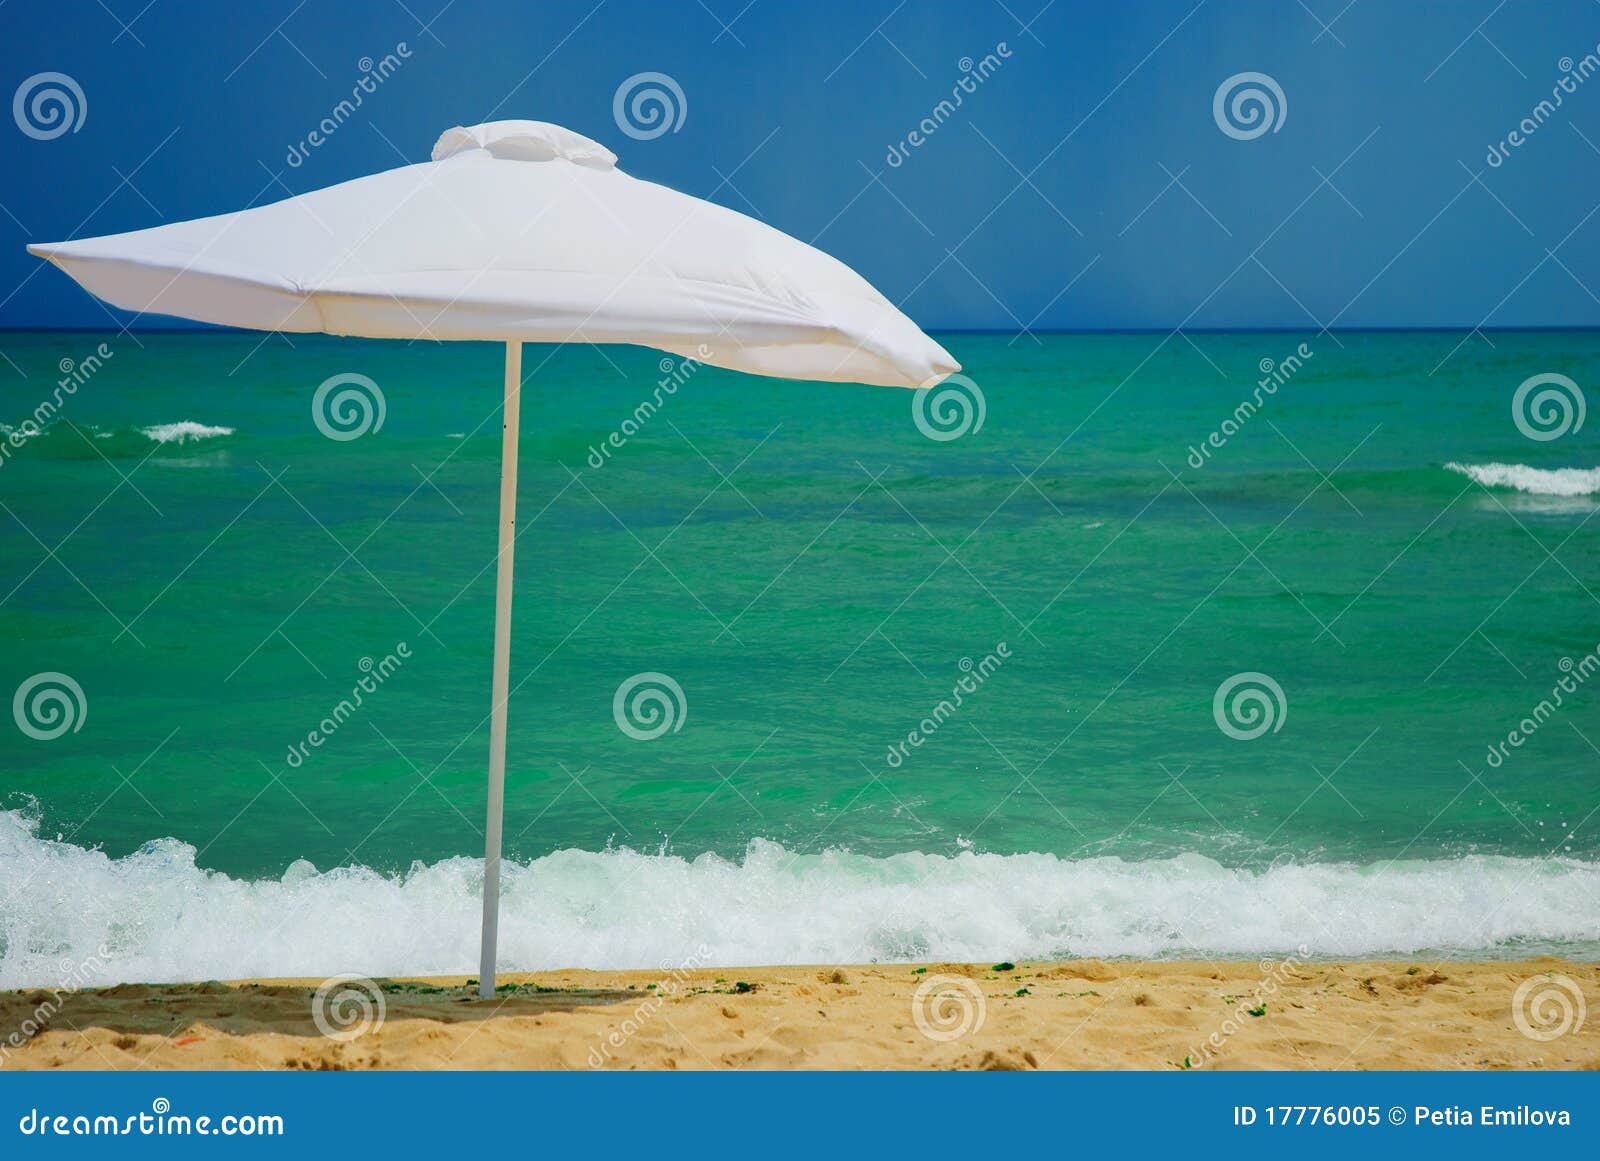 Umbrella at the beach stock image. Image of sand, travel - 17776005